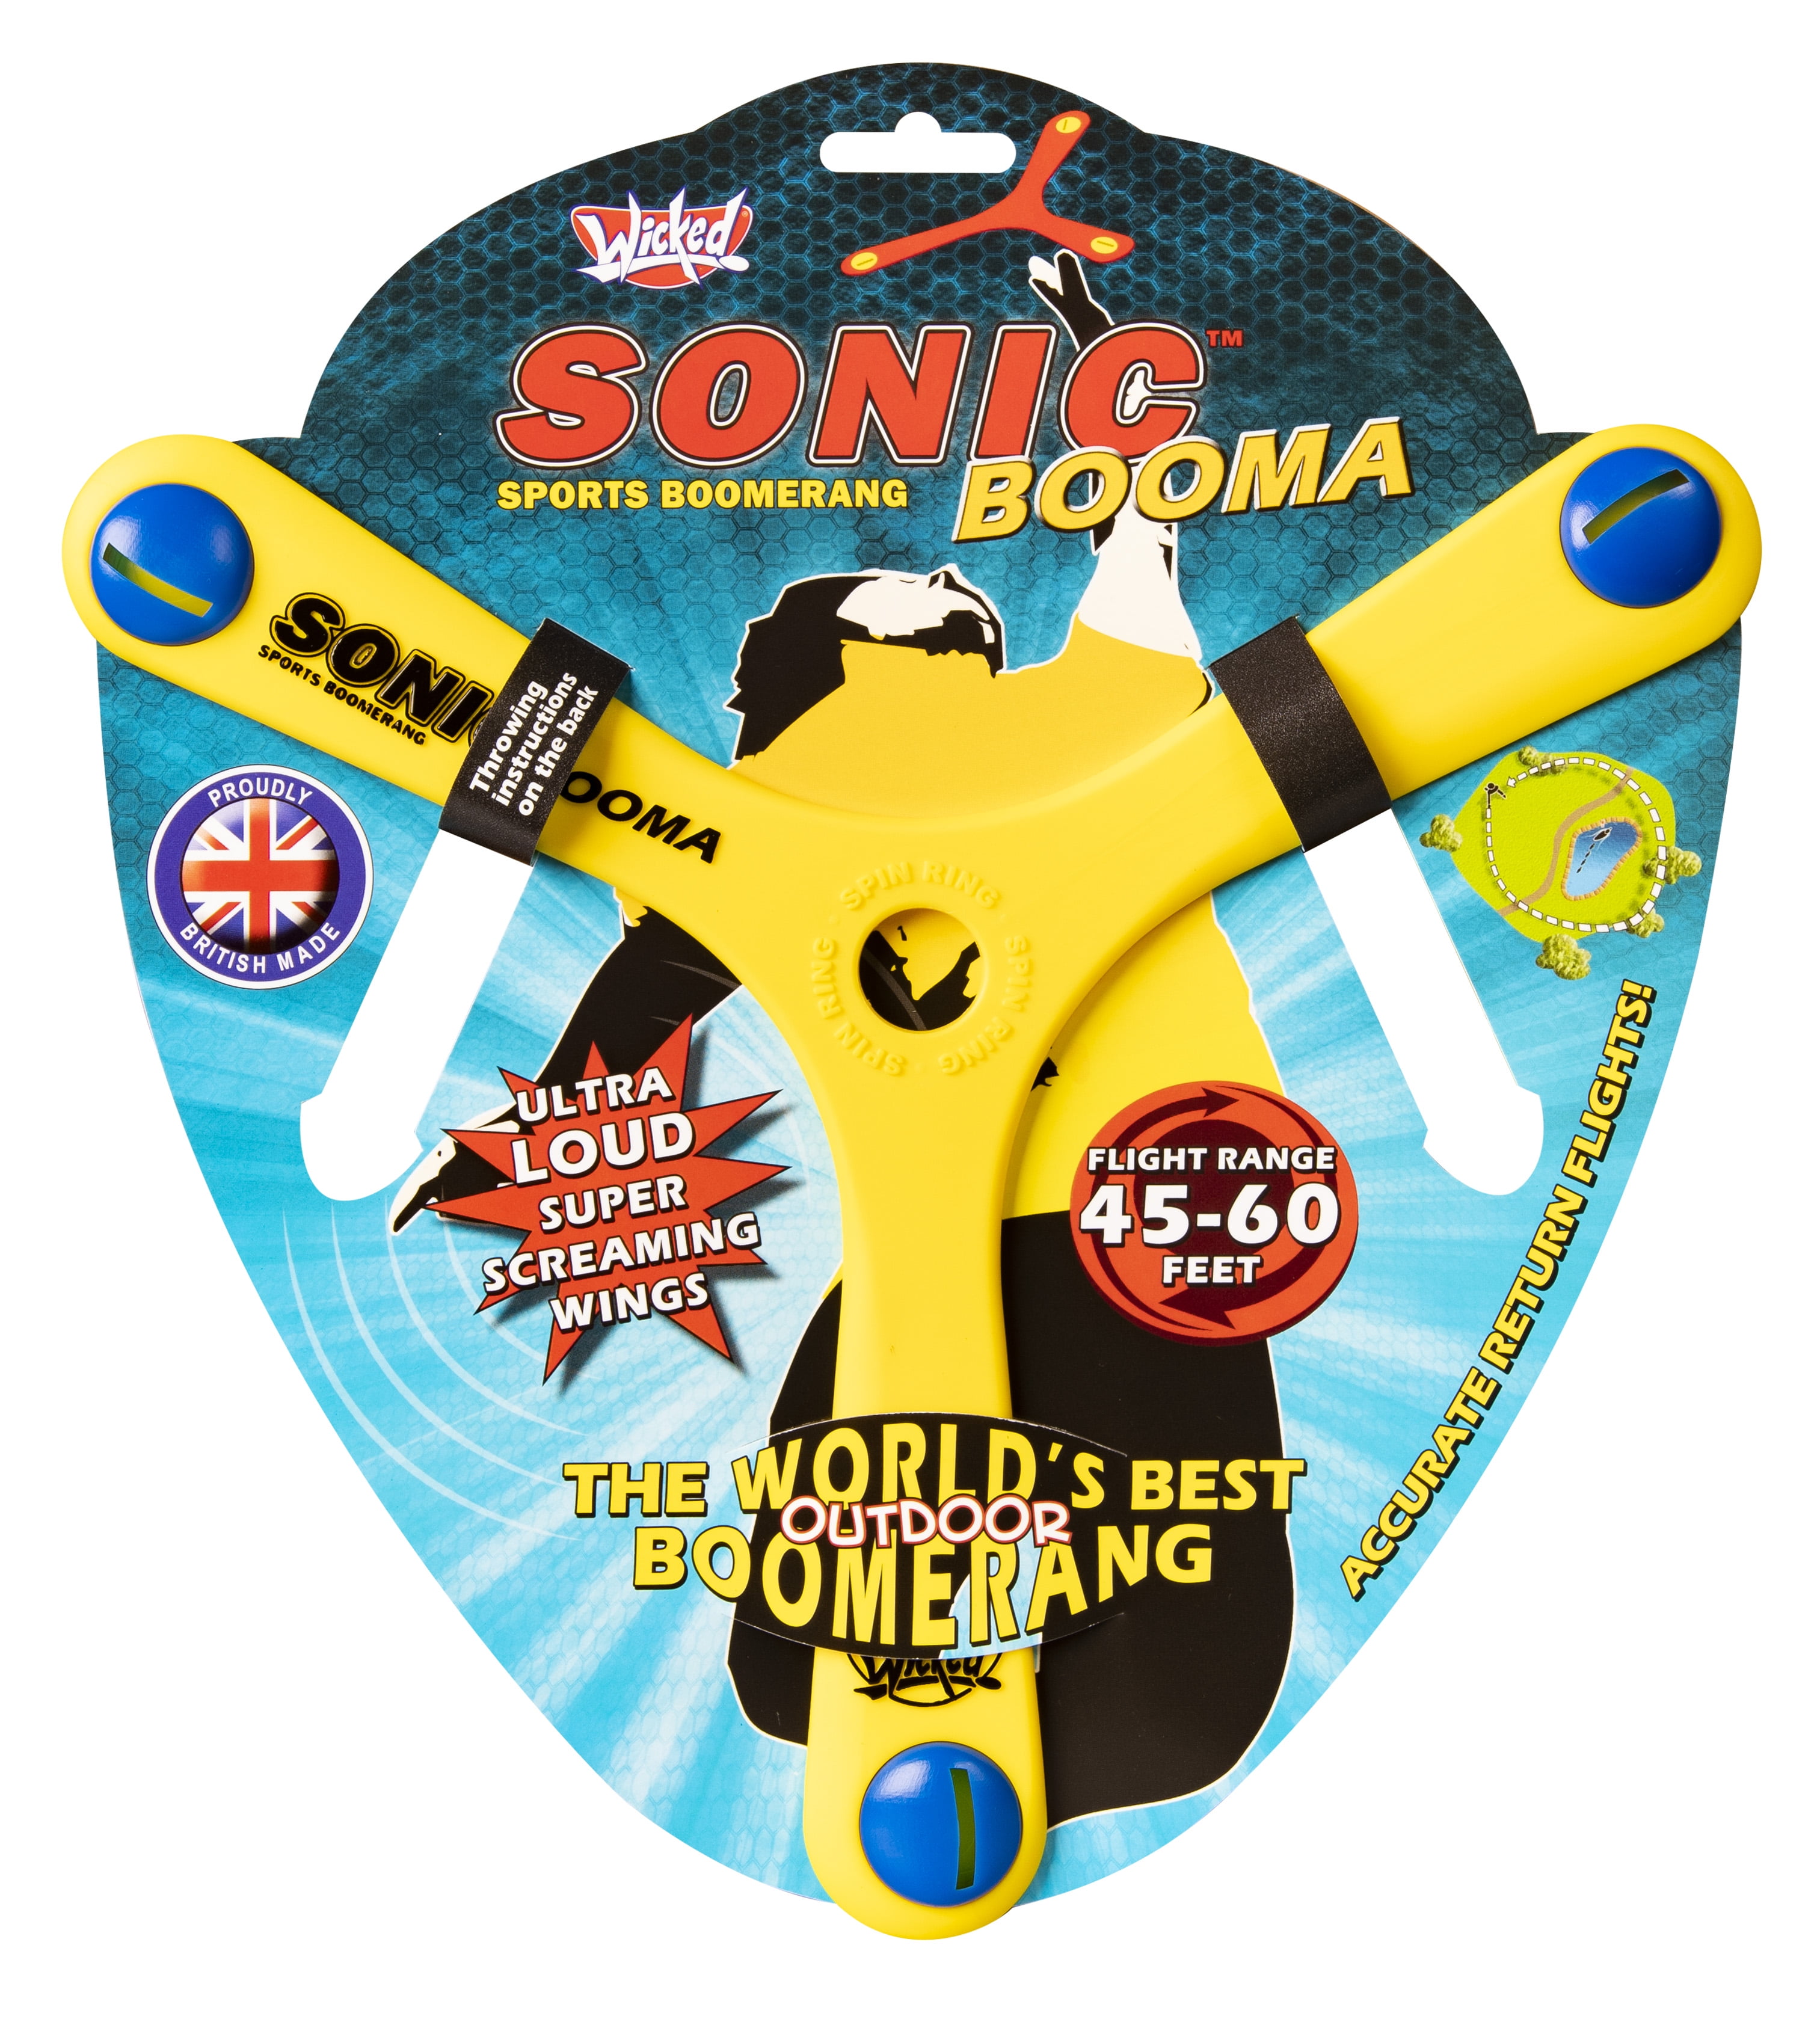 Duncan Sonic Booma Sports Boomerang 